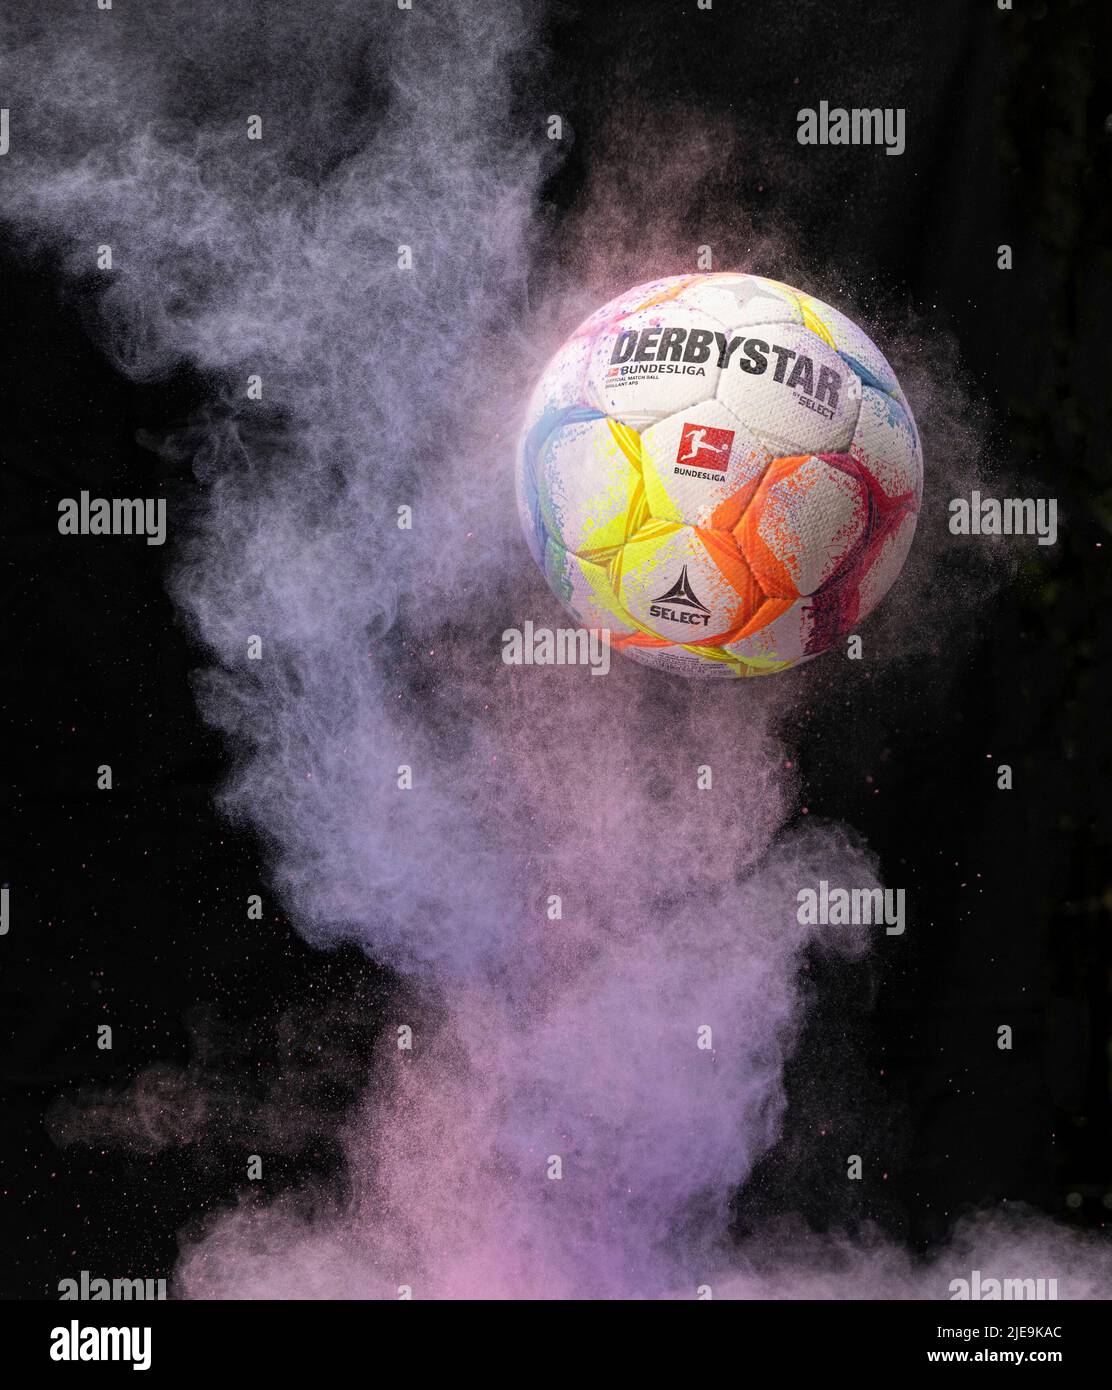 German Bundesliga Unveils Official Derbystar Match Balls for 2022